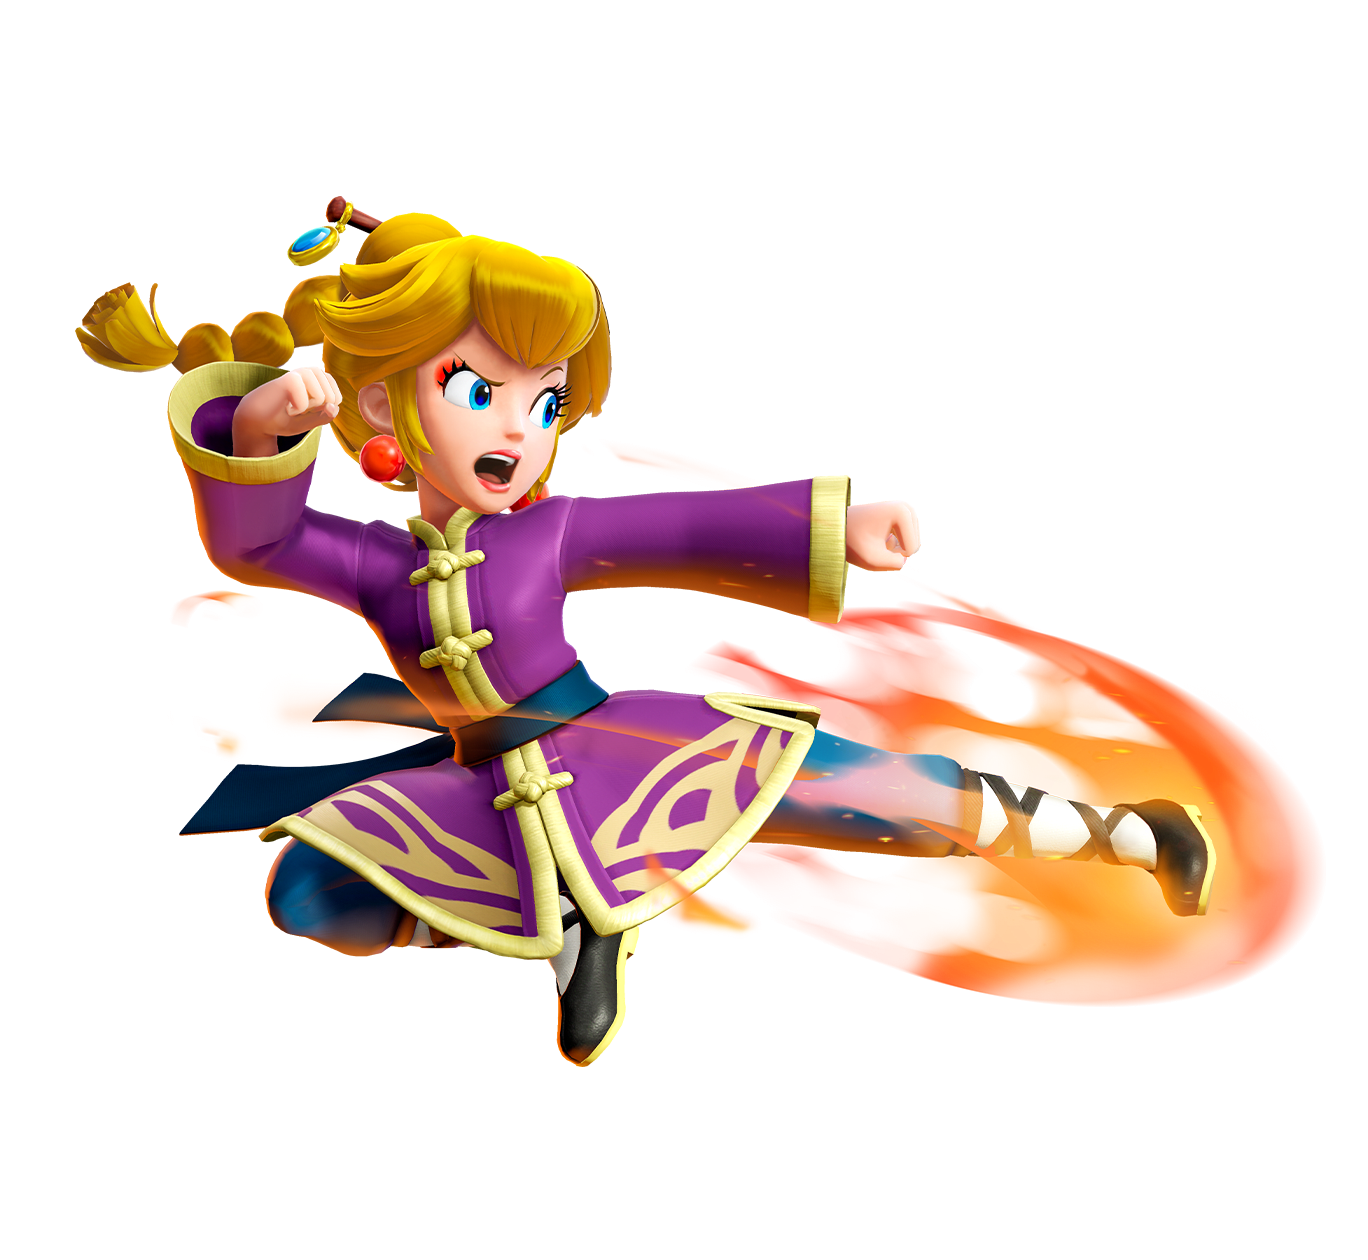 Looking fierce, Peach flies through the air as she kicks out with a flaming foot. She wears a purple Kung Fu uniform.